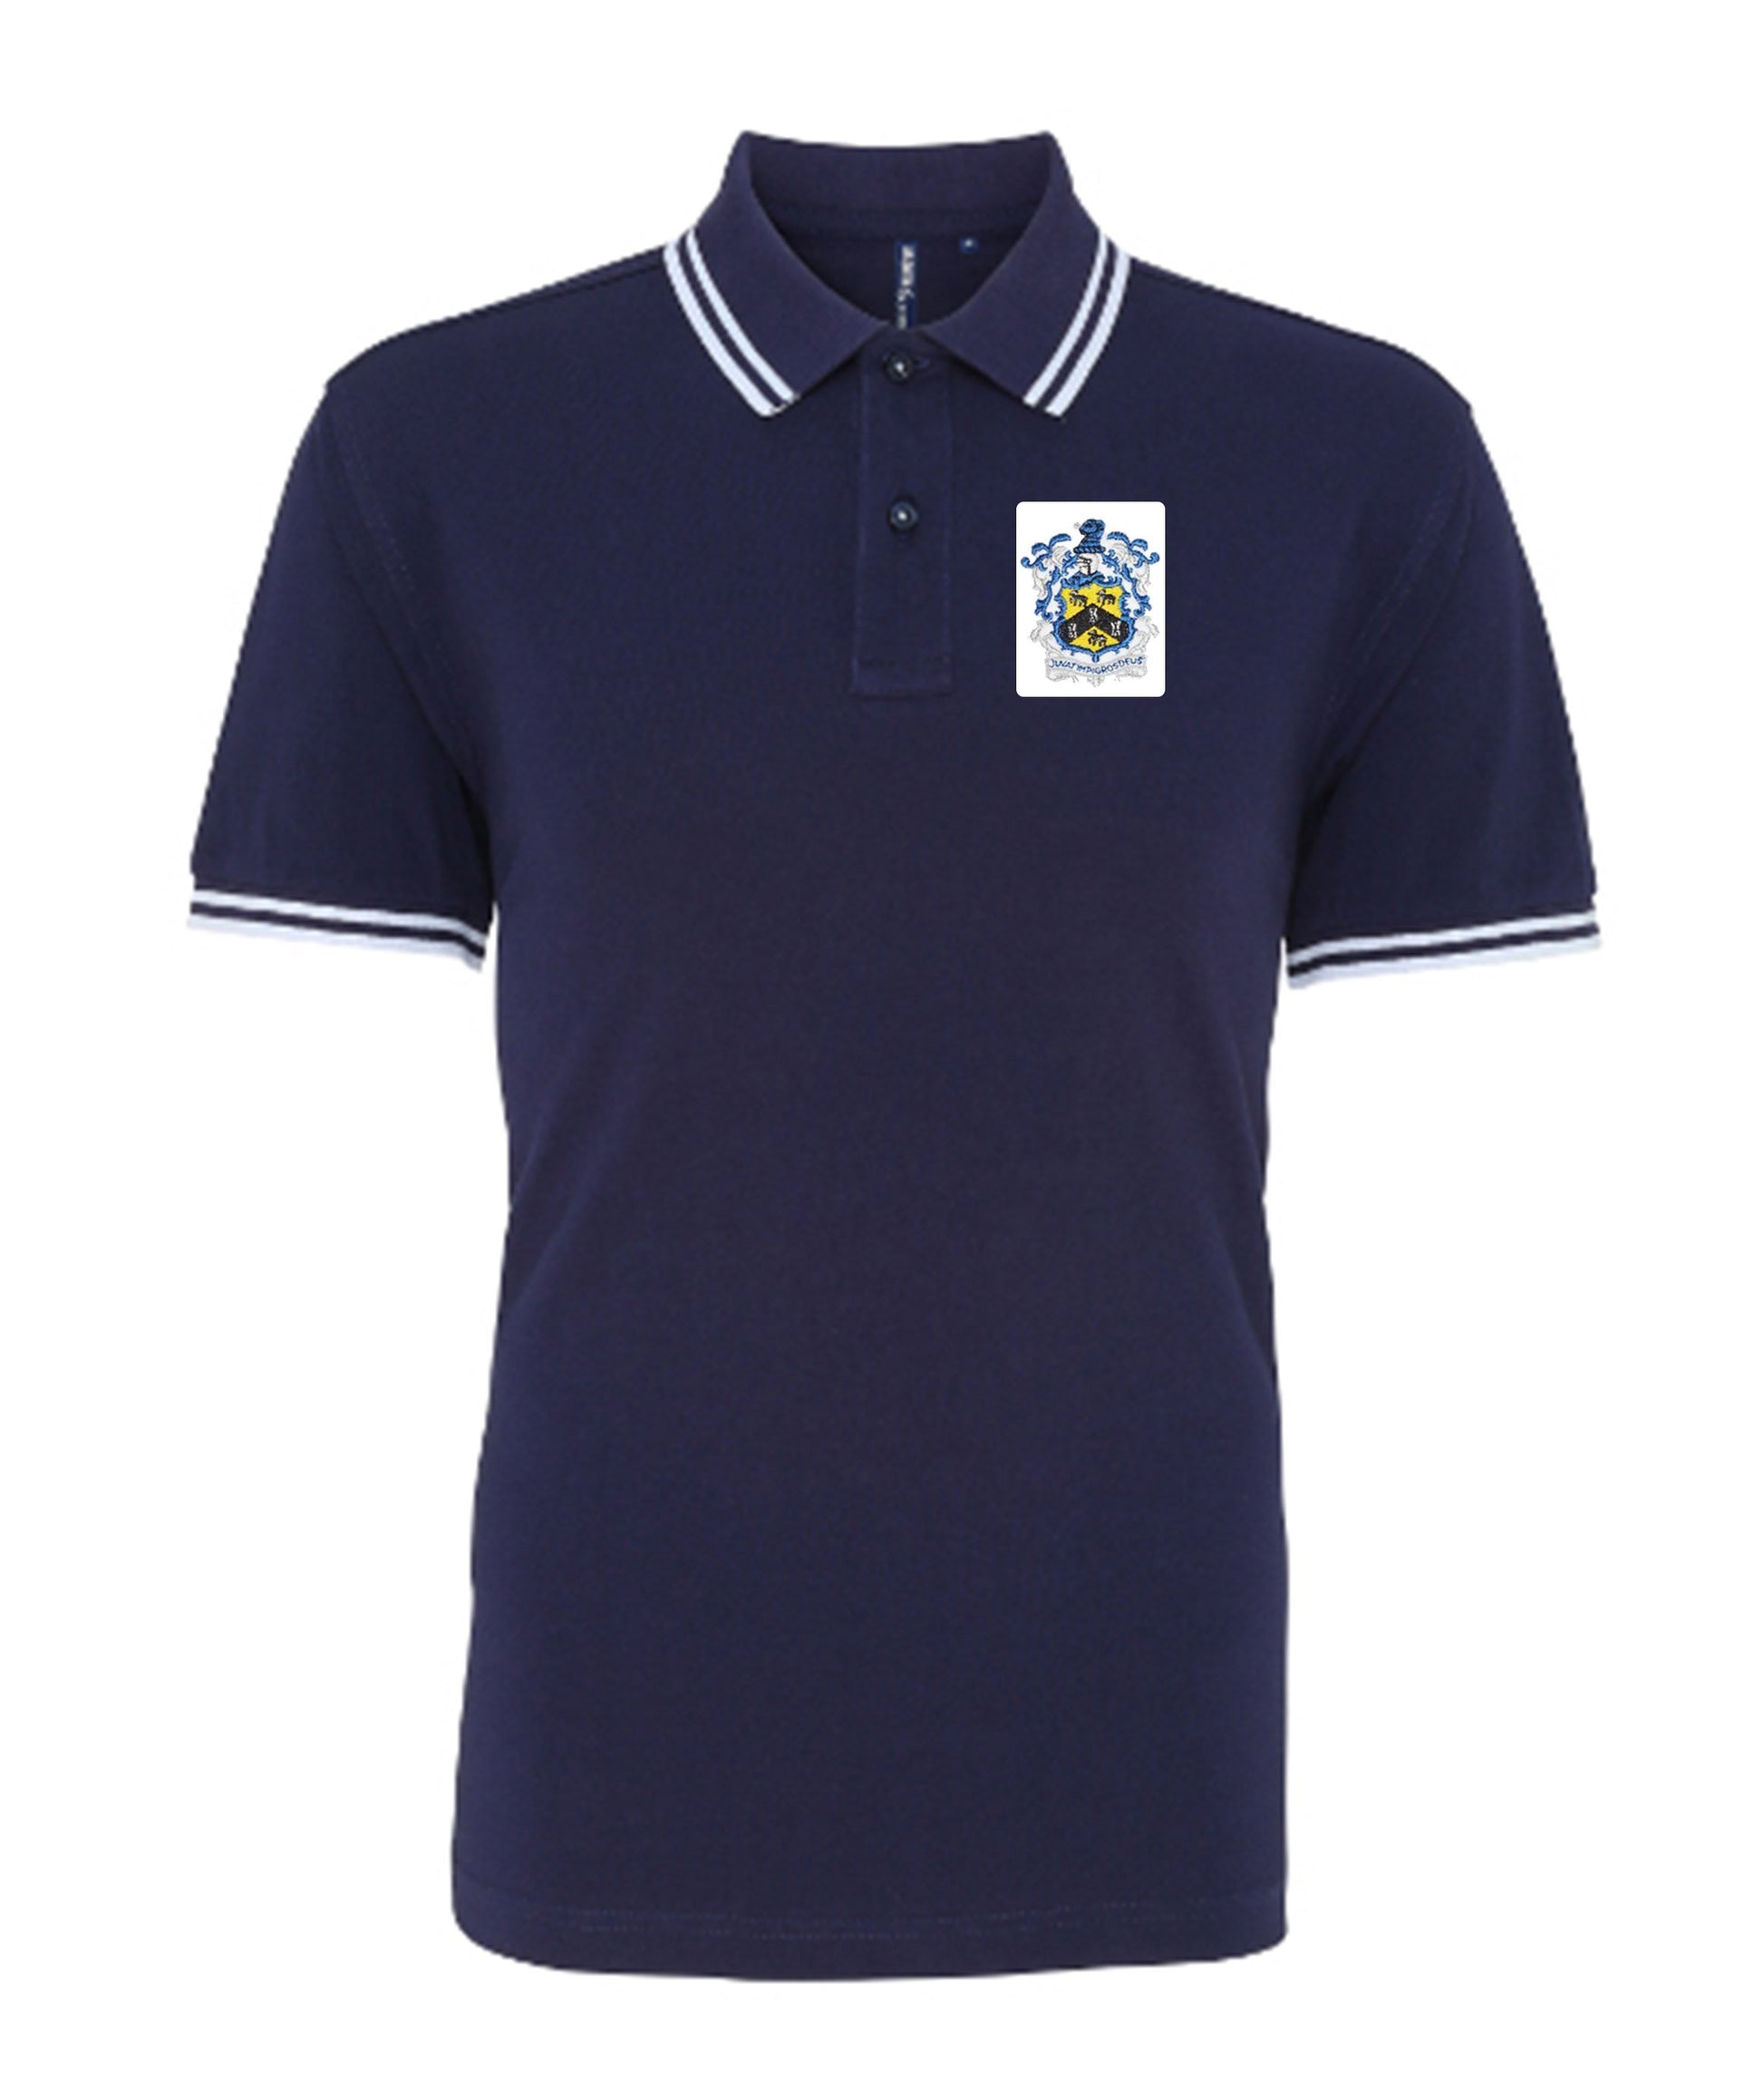 Huddersfield Town Retro Football Iconic Polo 1950s - Polo